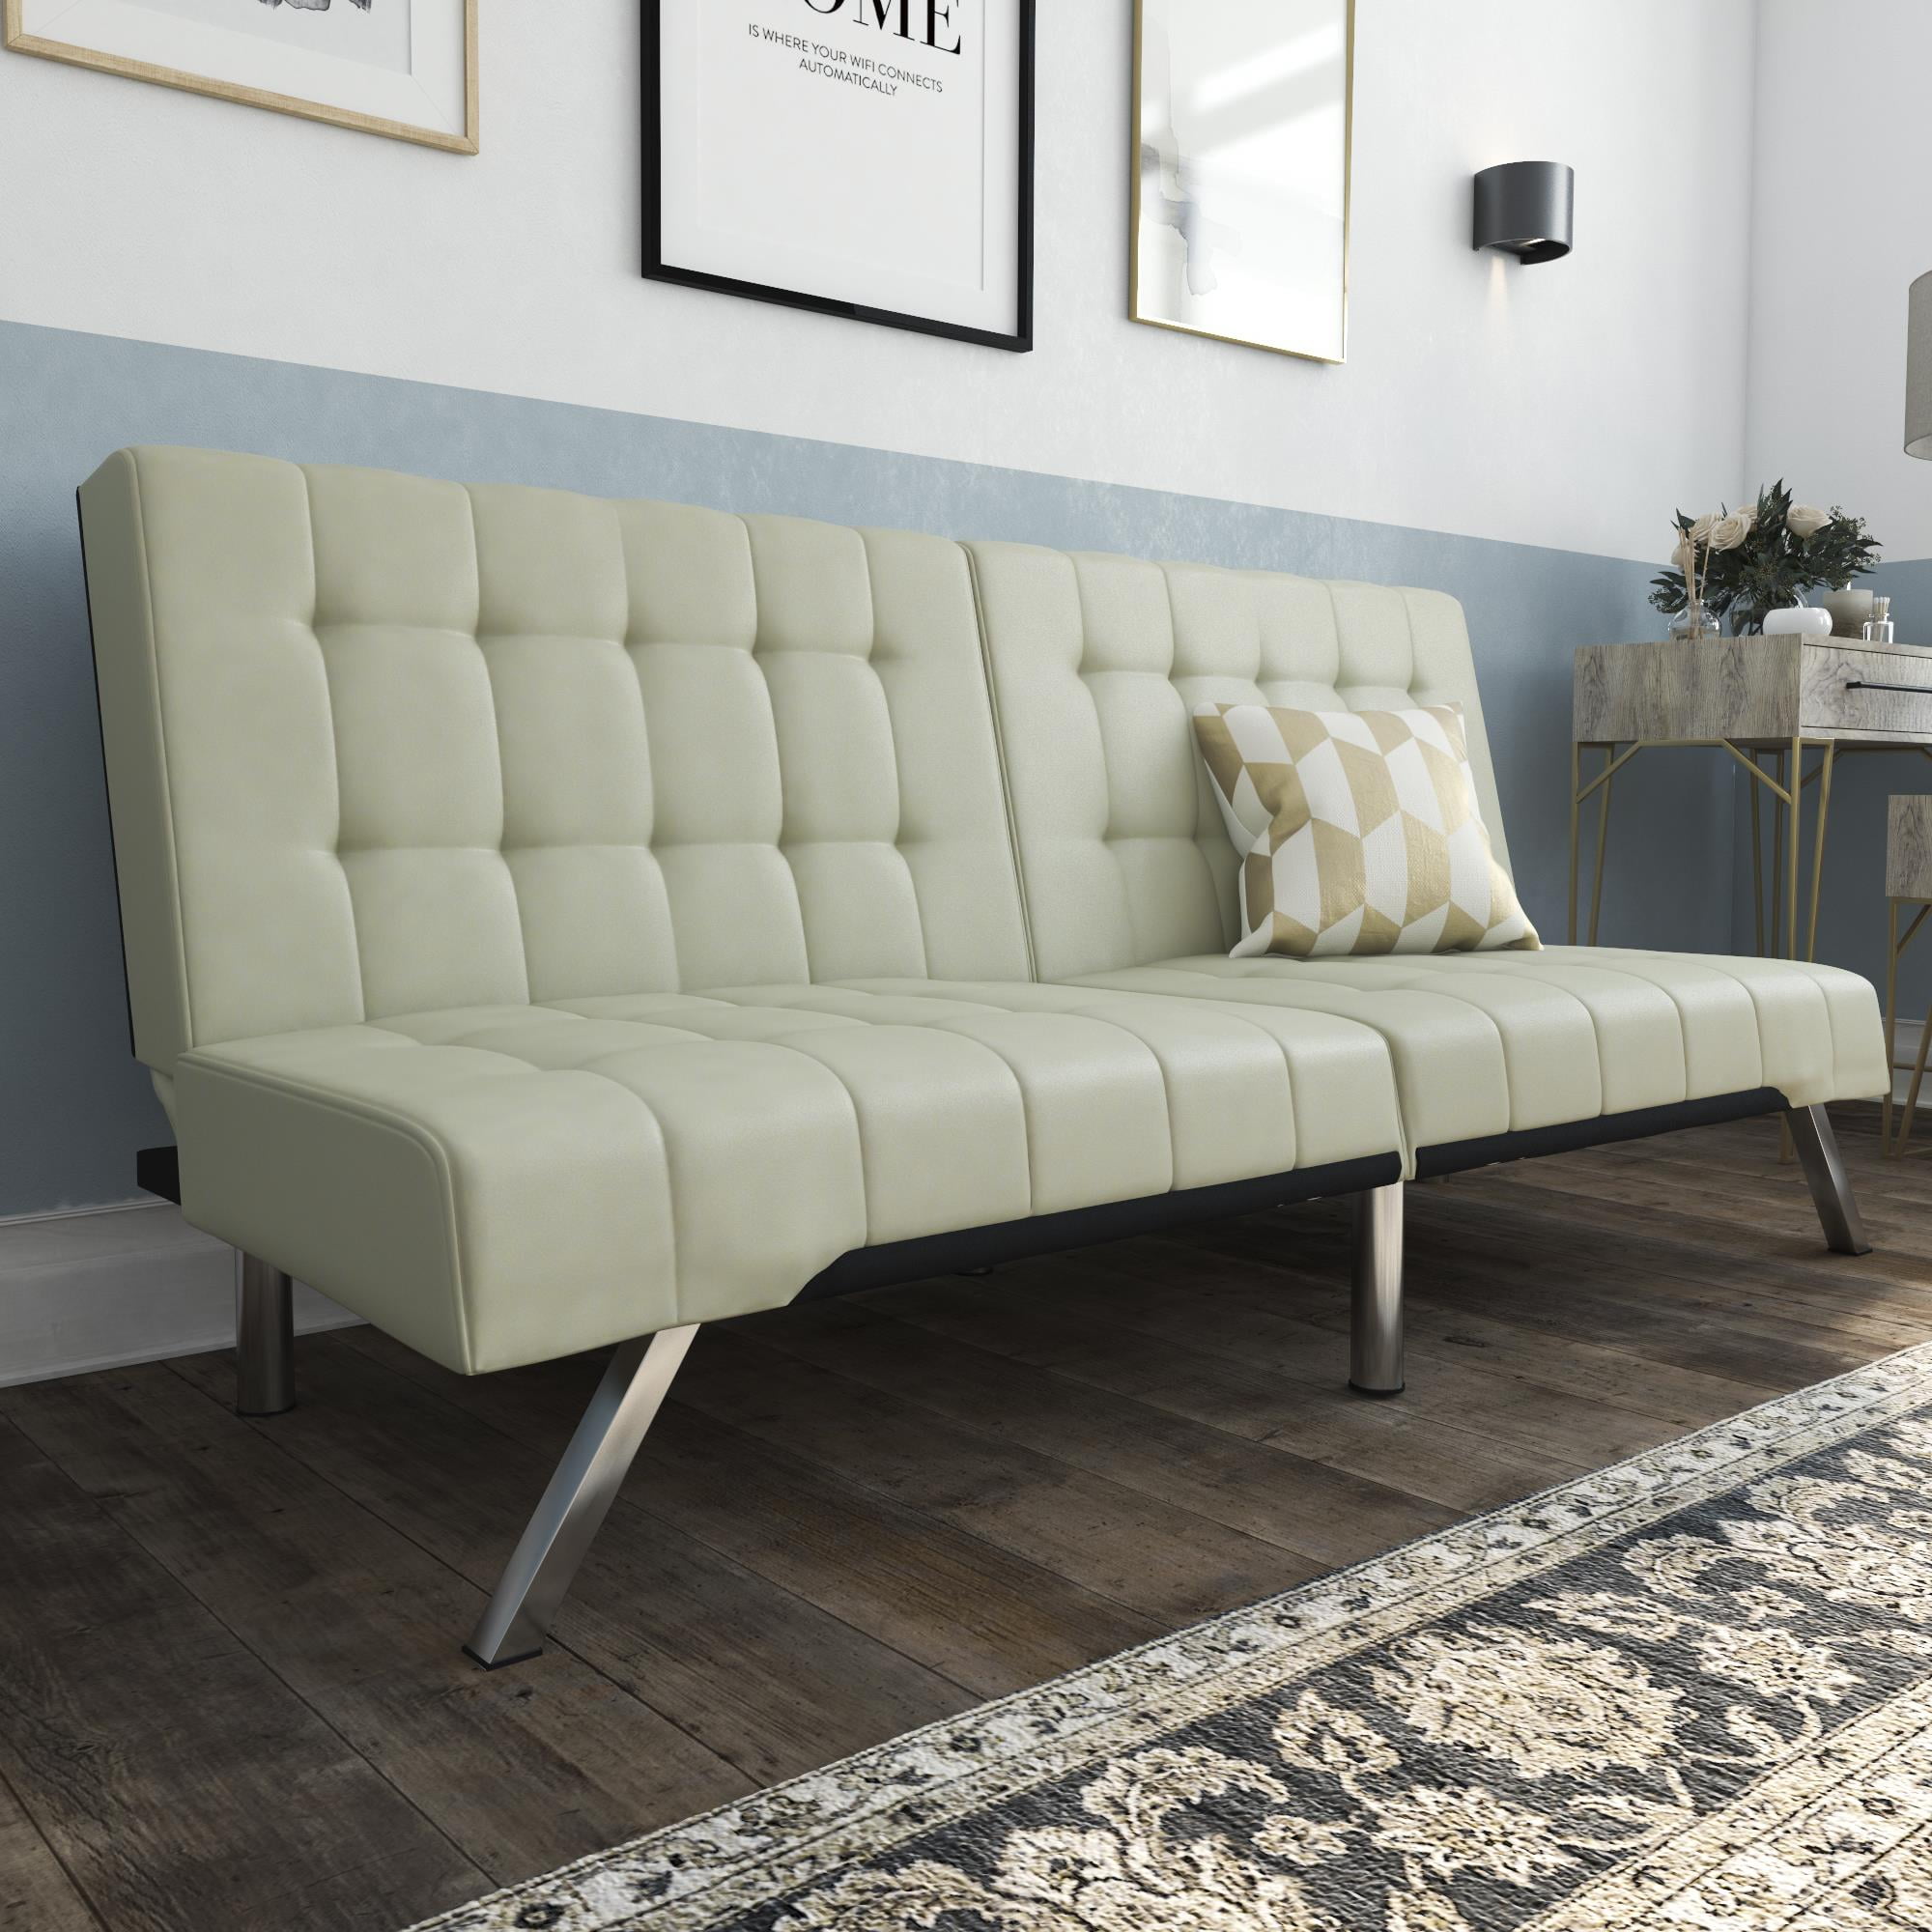 Dhp Emily Convertible Tufted Futon Sofa, Dhp Emily Convertible Futon Sofa Couch Review